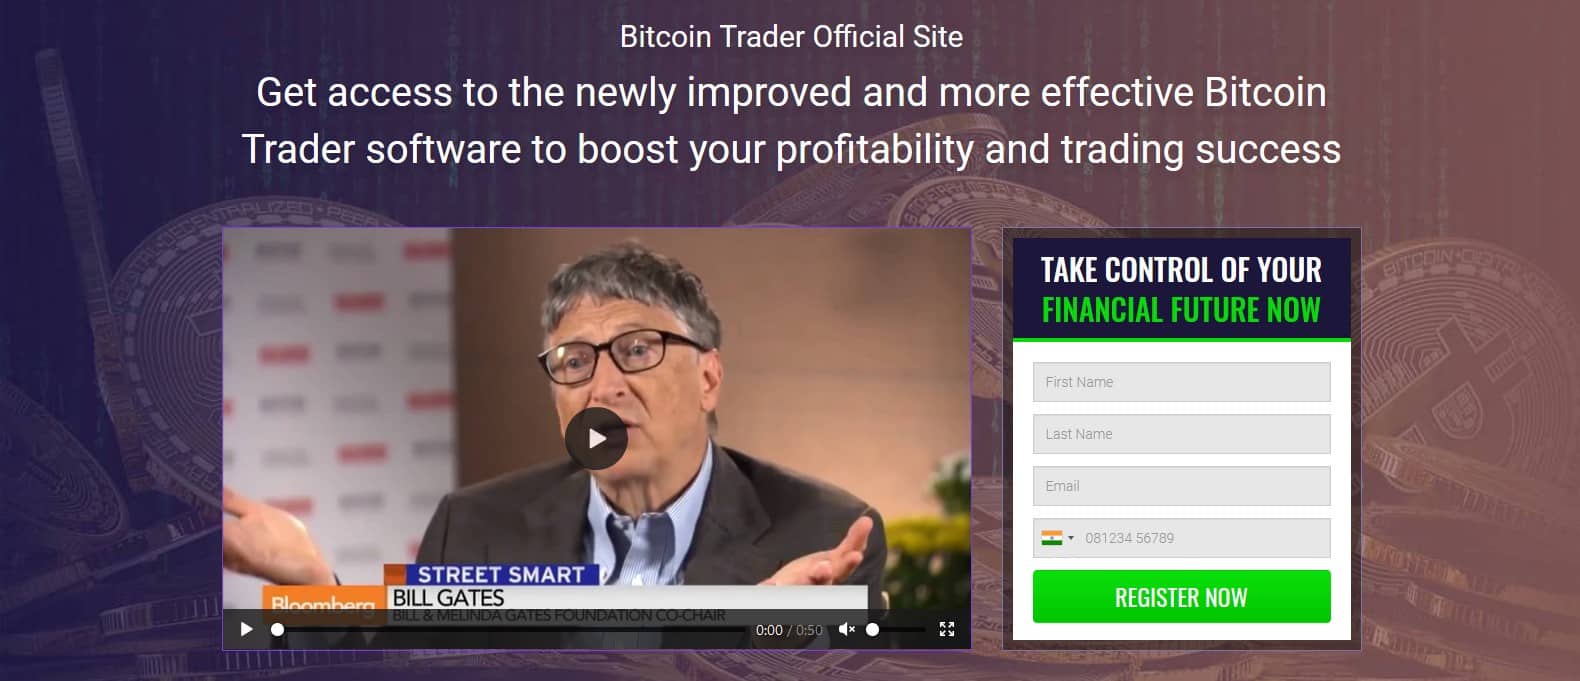 Bitcoin-trader